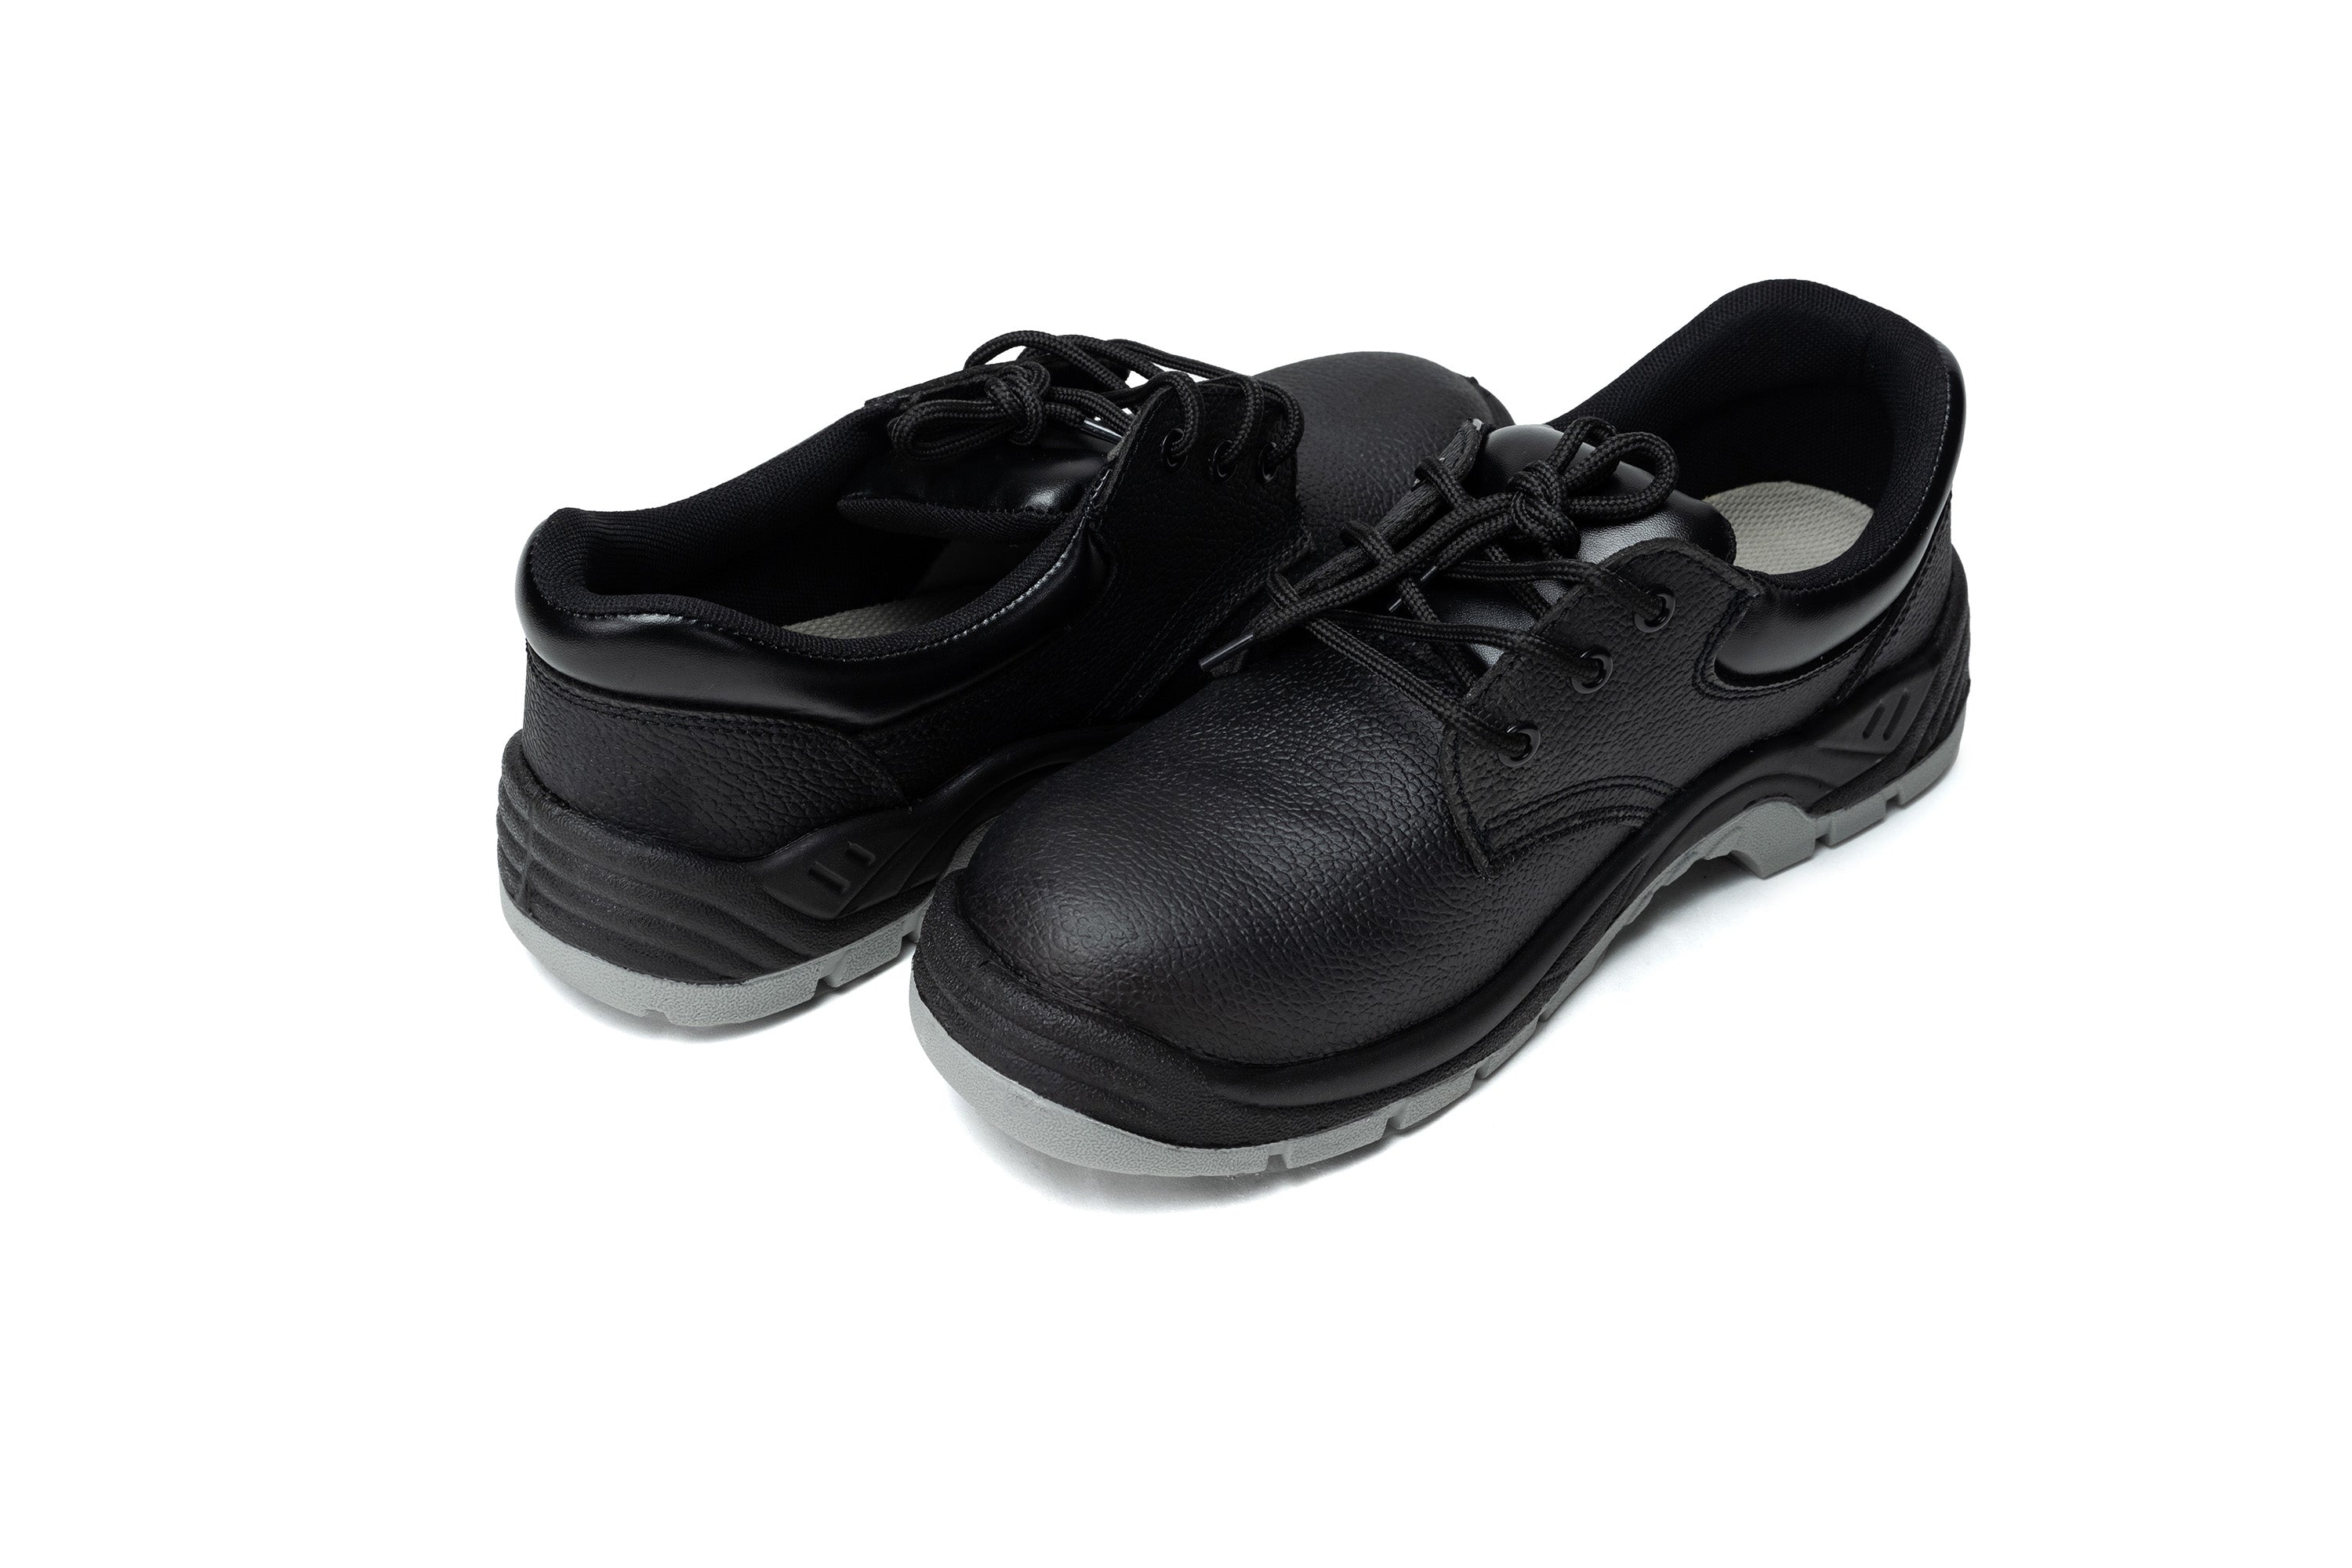 Safety Shoes (Cow Leather)-FAST-BK-EU Size: 37-偉豐鞋 WELL SHOE HK-Well Shoe-偉豐鞋-偉豐網-荃灣鞋店-Functional shoes-Hong Kong Tsuen Wan Shoe Store-Tai Wan Shoe-Japan Shoe-高品質功能鞋-台灣進口鞋-日本進口鞋-High-quality shoes-鞋類配件-荃灣進口鞋-香港鞋店-優質鞋類產品-水靴-帆布鞋-廚師鞋-香港鞋品牌-Hong Kong Shoes brand-長者鞋-Hong Kong Rain Boots-Kitchen shoes-Cruthes-Slipper-Well Shoe Hong Kong-Anello-Arriba-休閒鞋-舒適鞋-健康鞋-皮鞋-Healthy shoes-Leather shoes-Hiking shoes